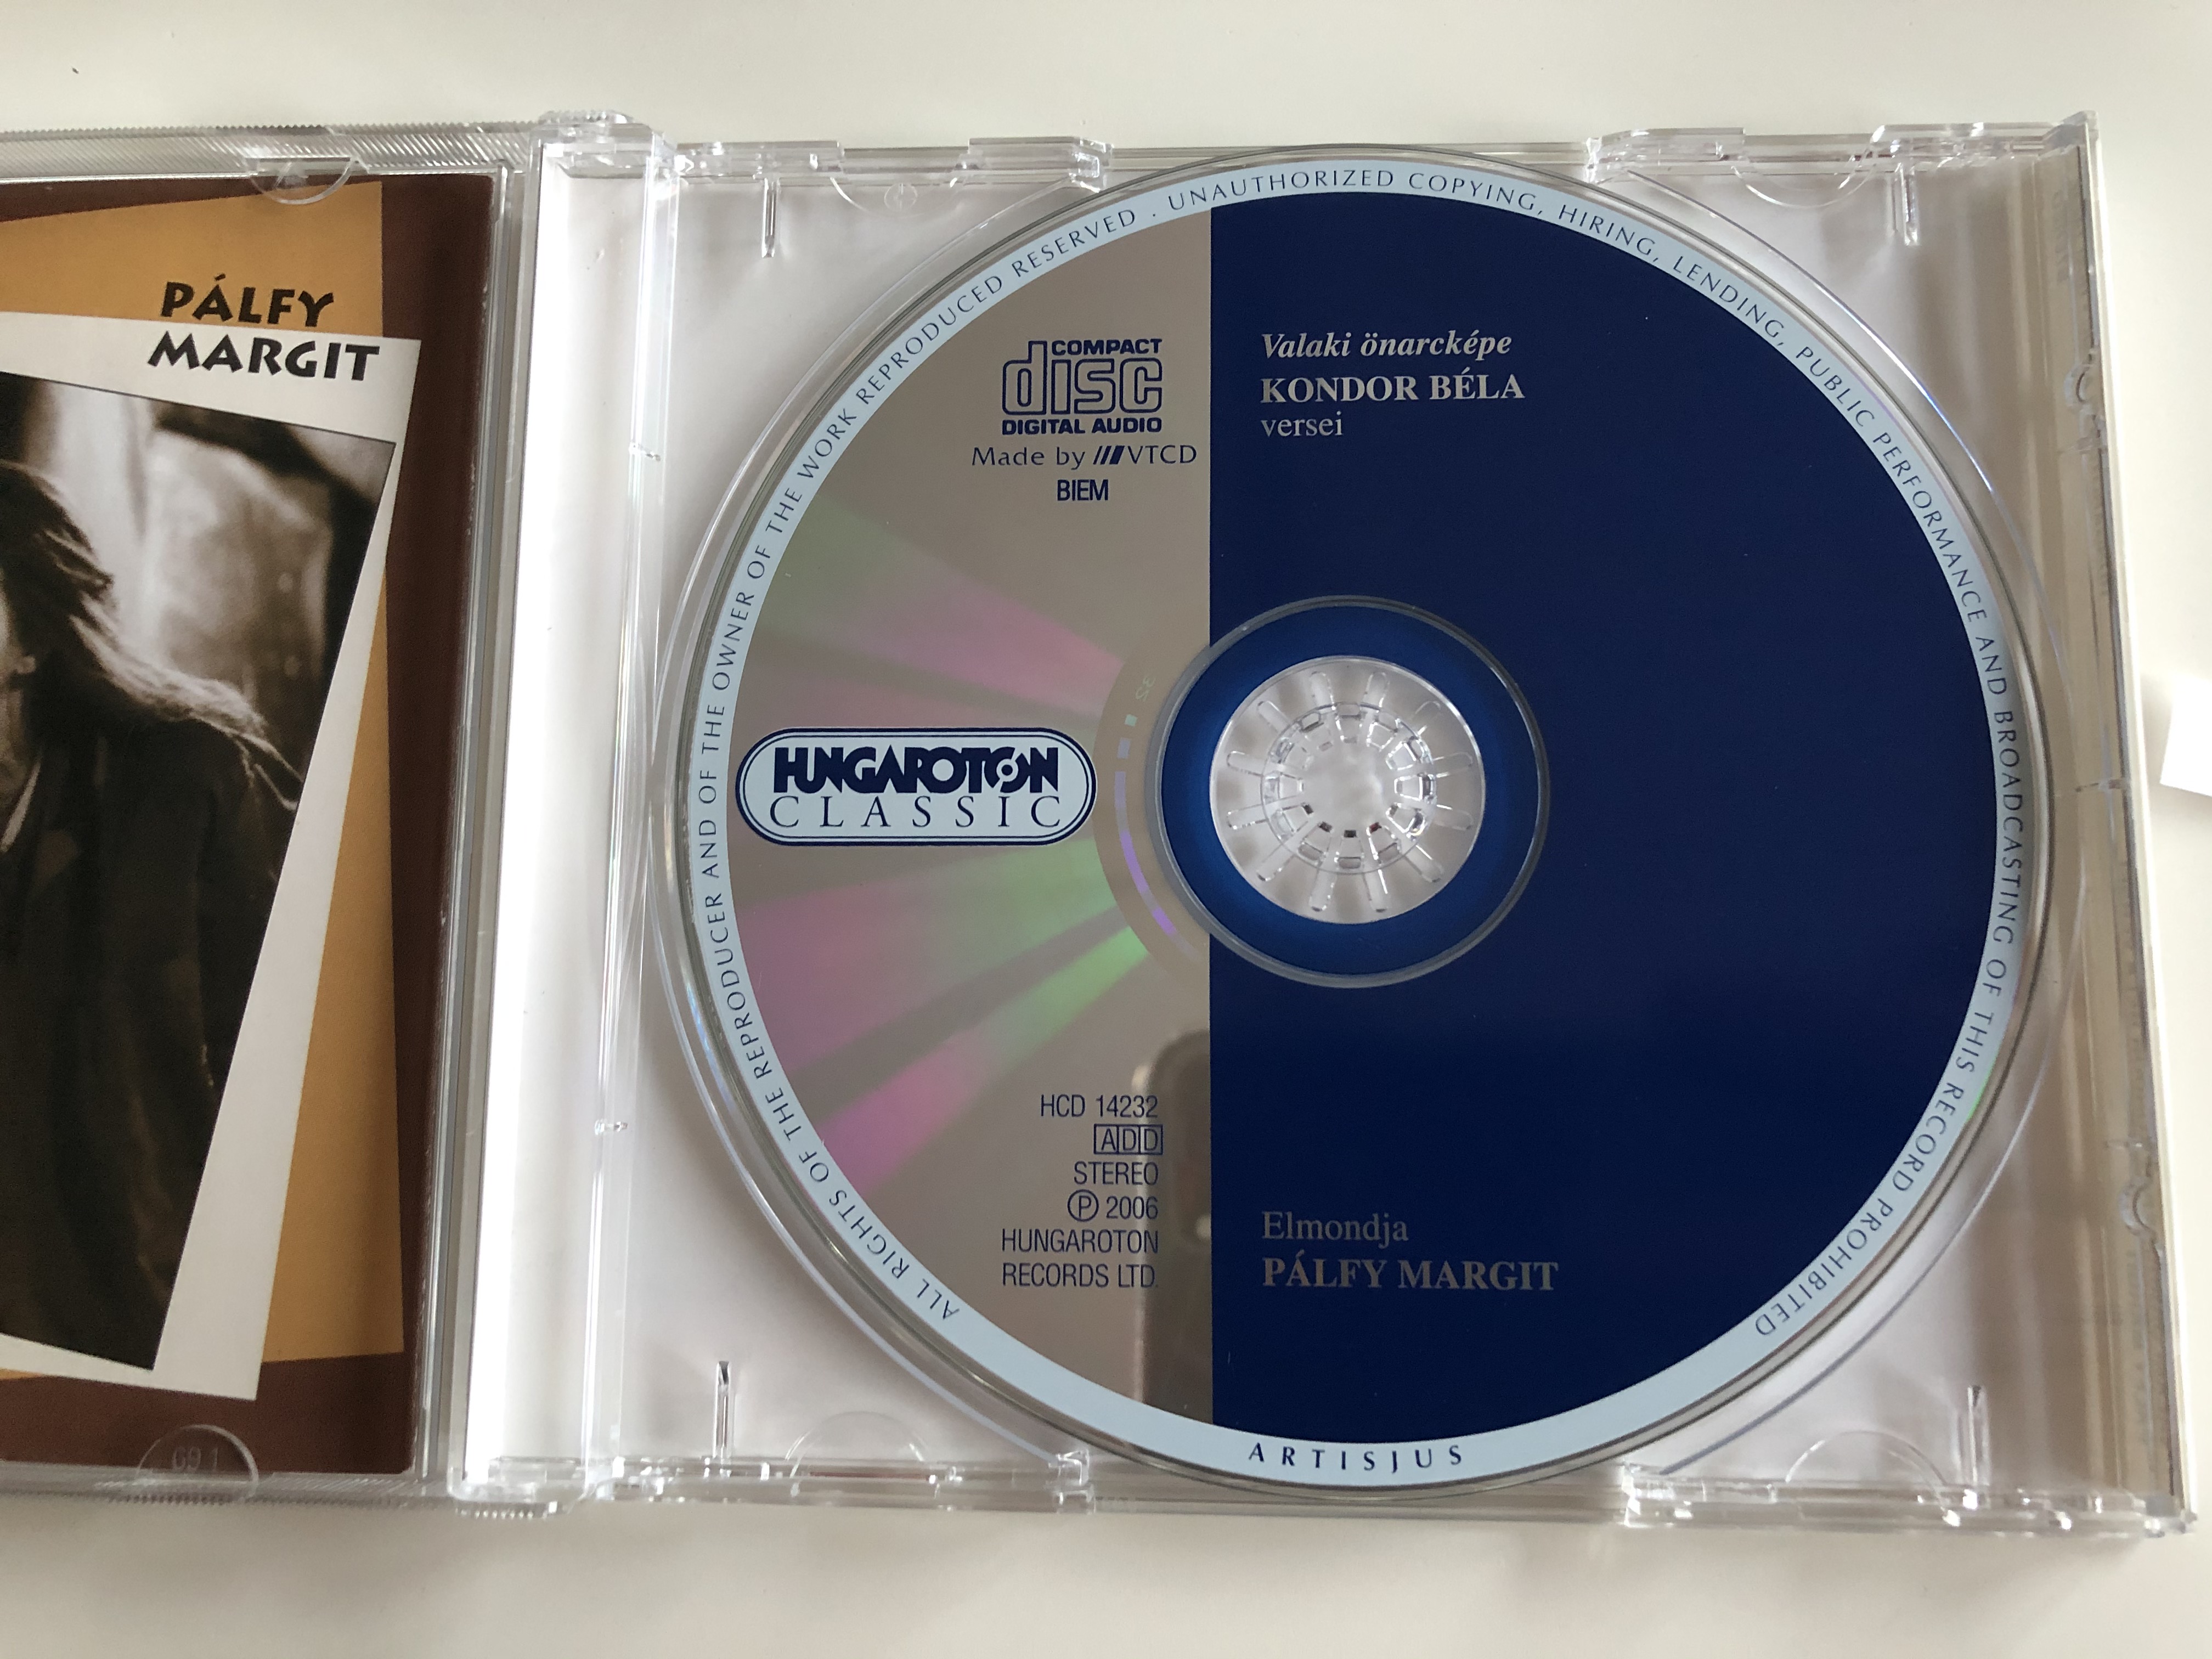 kondor-bela-valaki-onarckepe-elmondja-palfy-margit-hungaroton-classic-audio-cd-2006-stereo-hcd-14232-5-.jpg